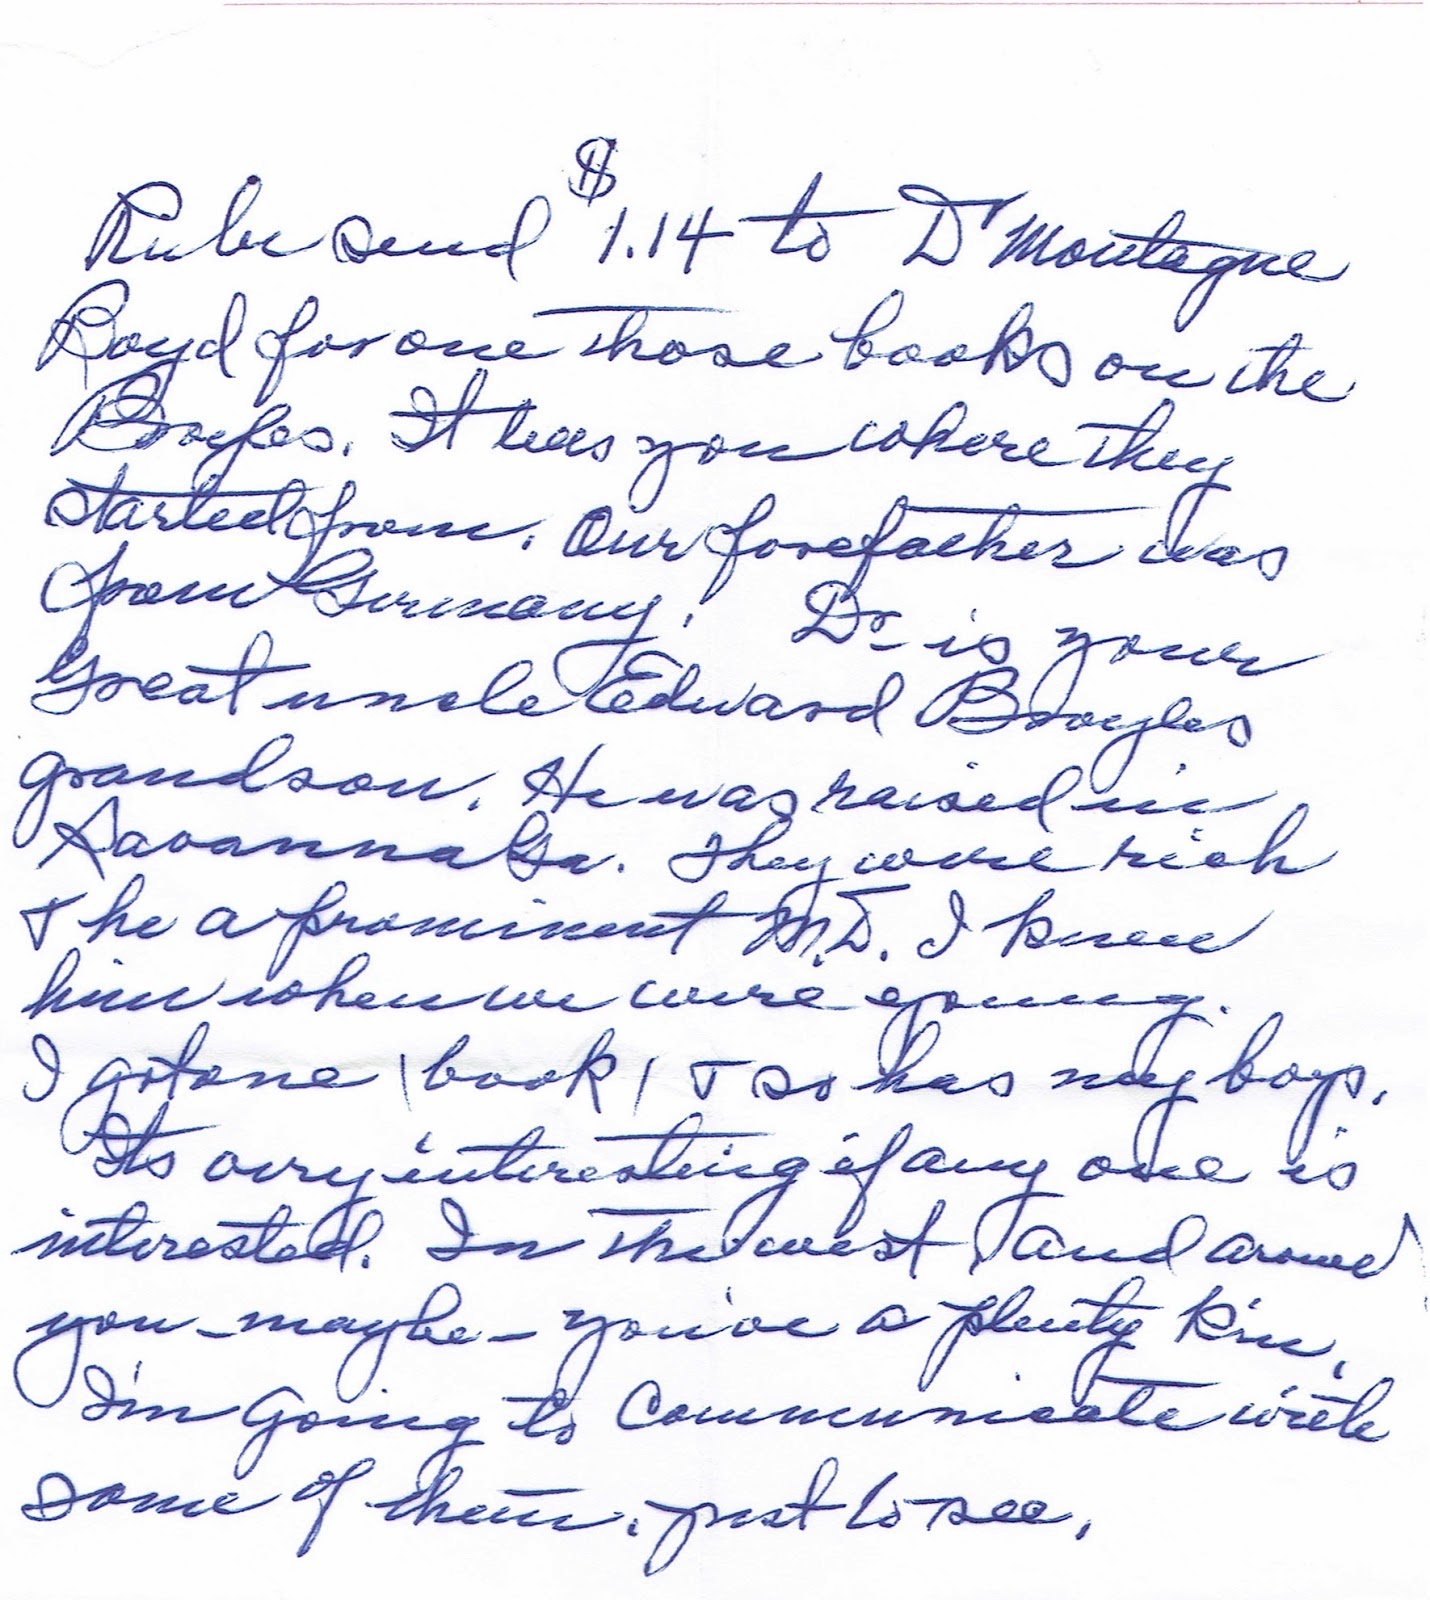 Nellie Broyles Jones writing to Ruby Davis regarding a genealogy book on the Broyles family